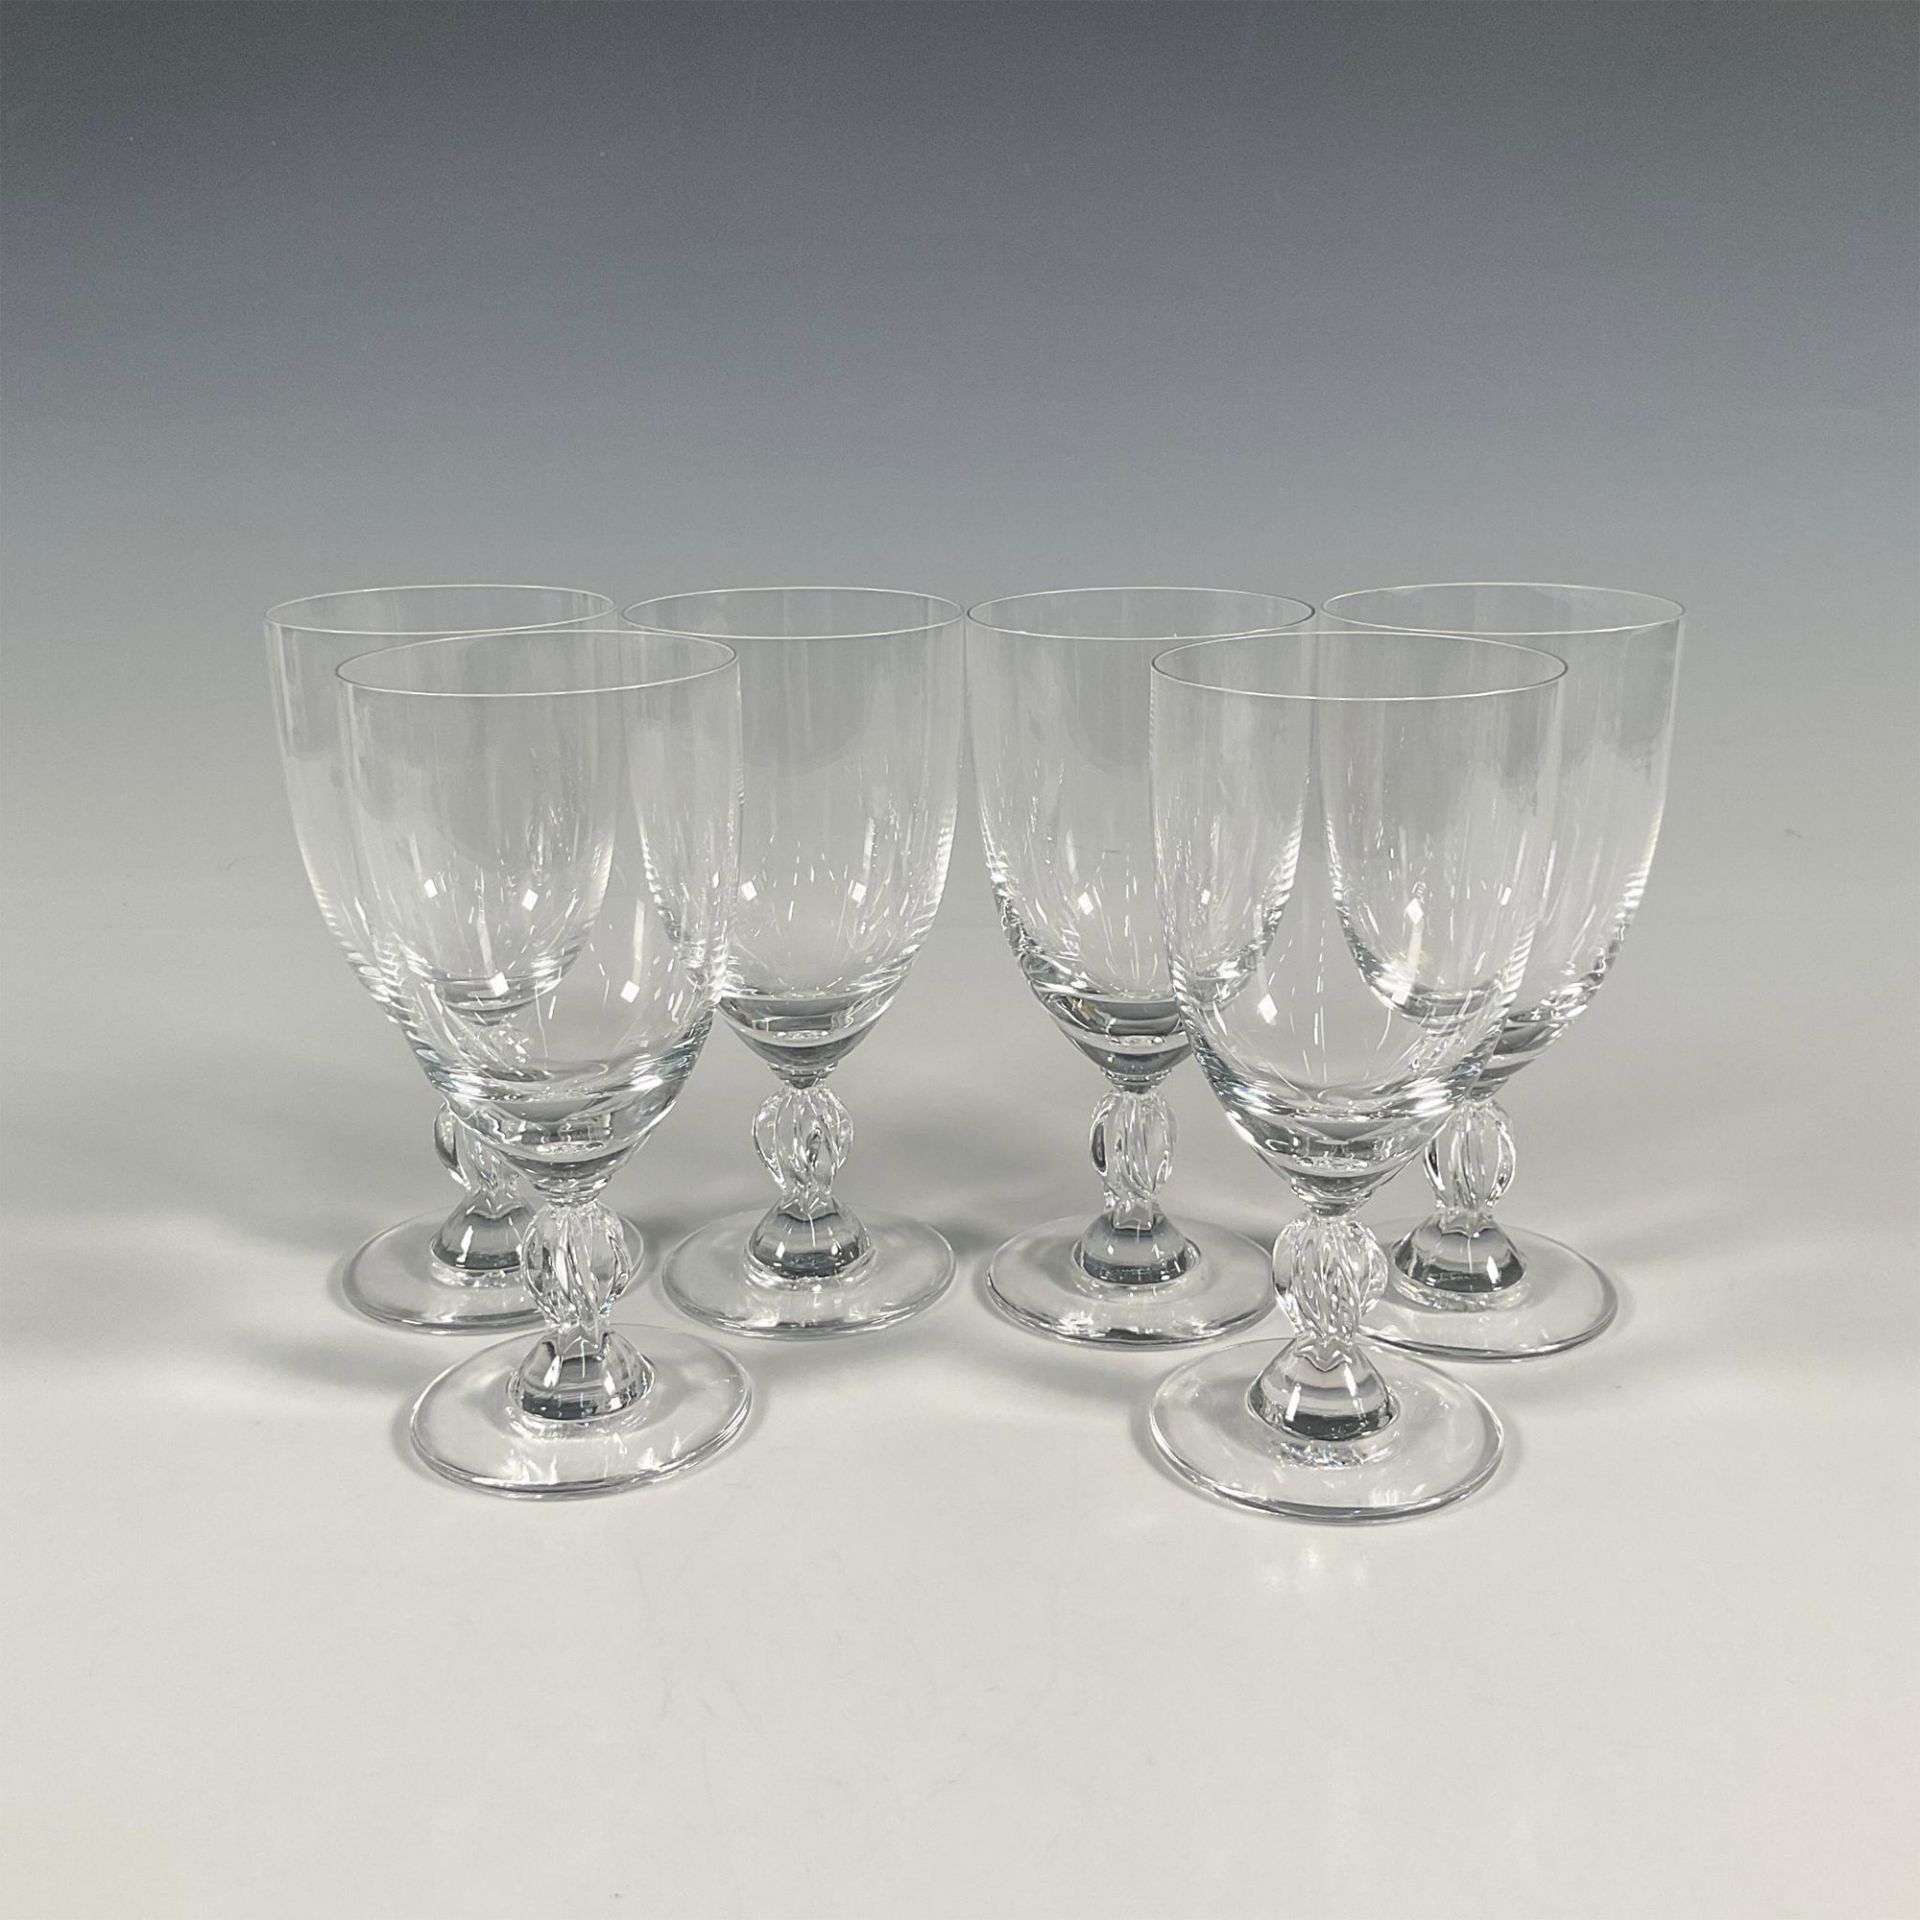 6pc Lalique Crystal Bordeaux Wine Glasses, Frejus - Image 2 of 4